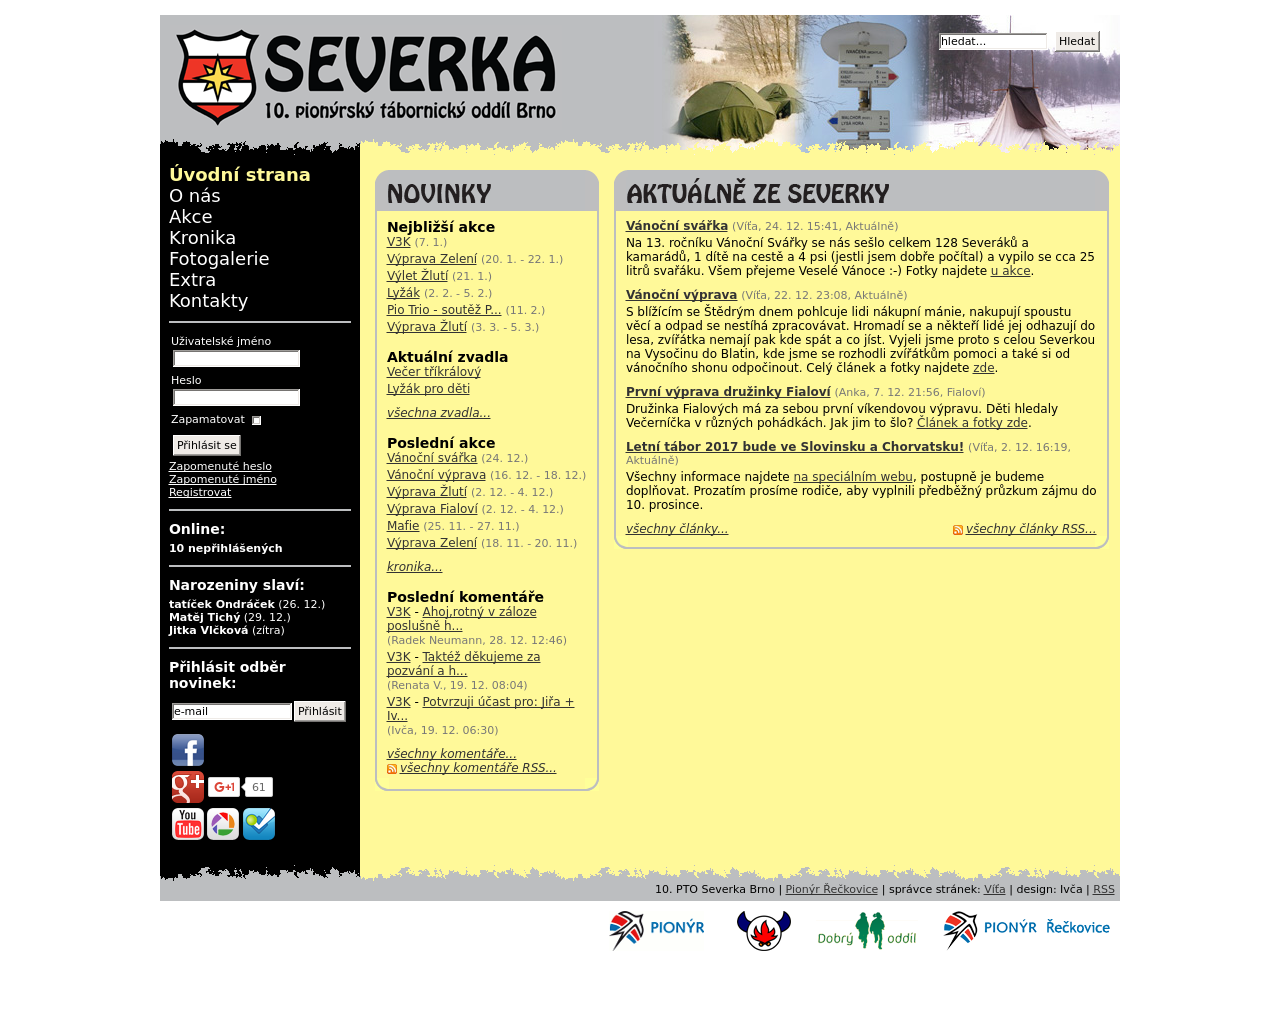 Site Image severka.cz v 1280x1024